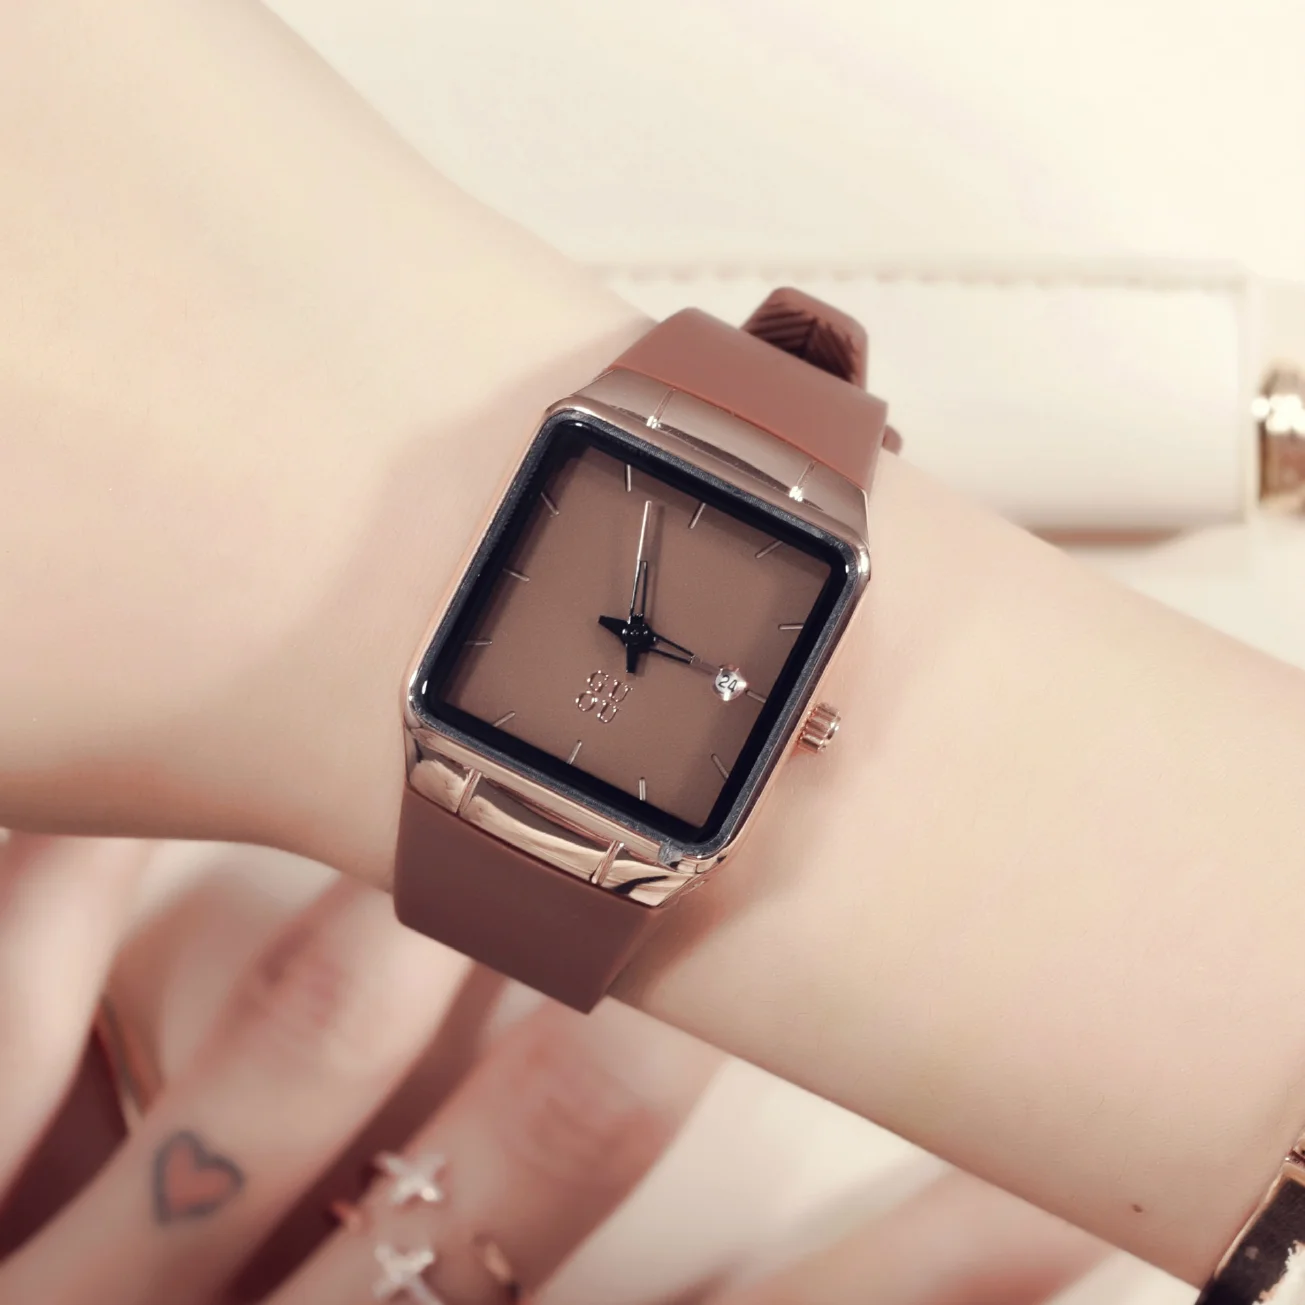 2018 GUOU Brand Watches Women Luxury Rose Gold Antique Square Casual Leather Dress Quartz Wrist watch Relogio Feminino Montre enlarge